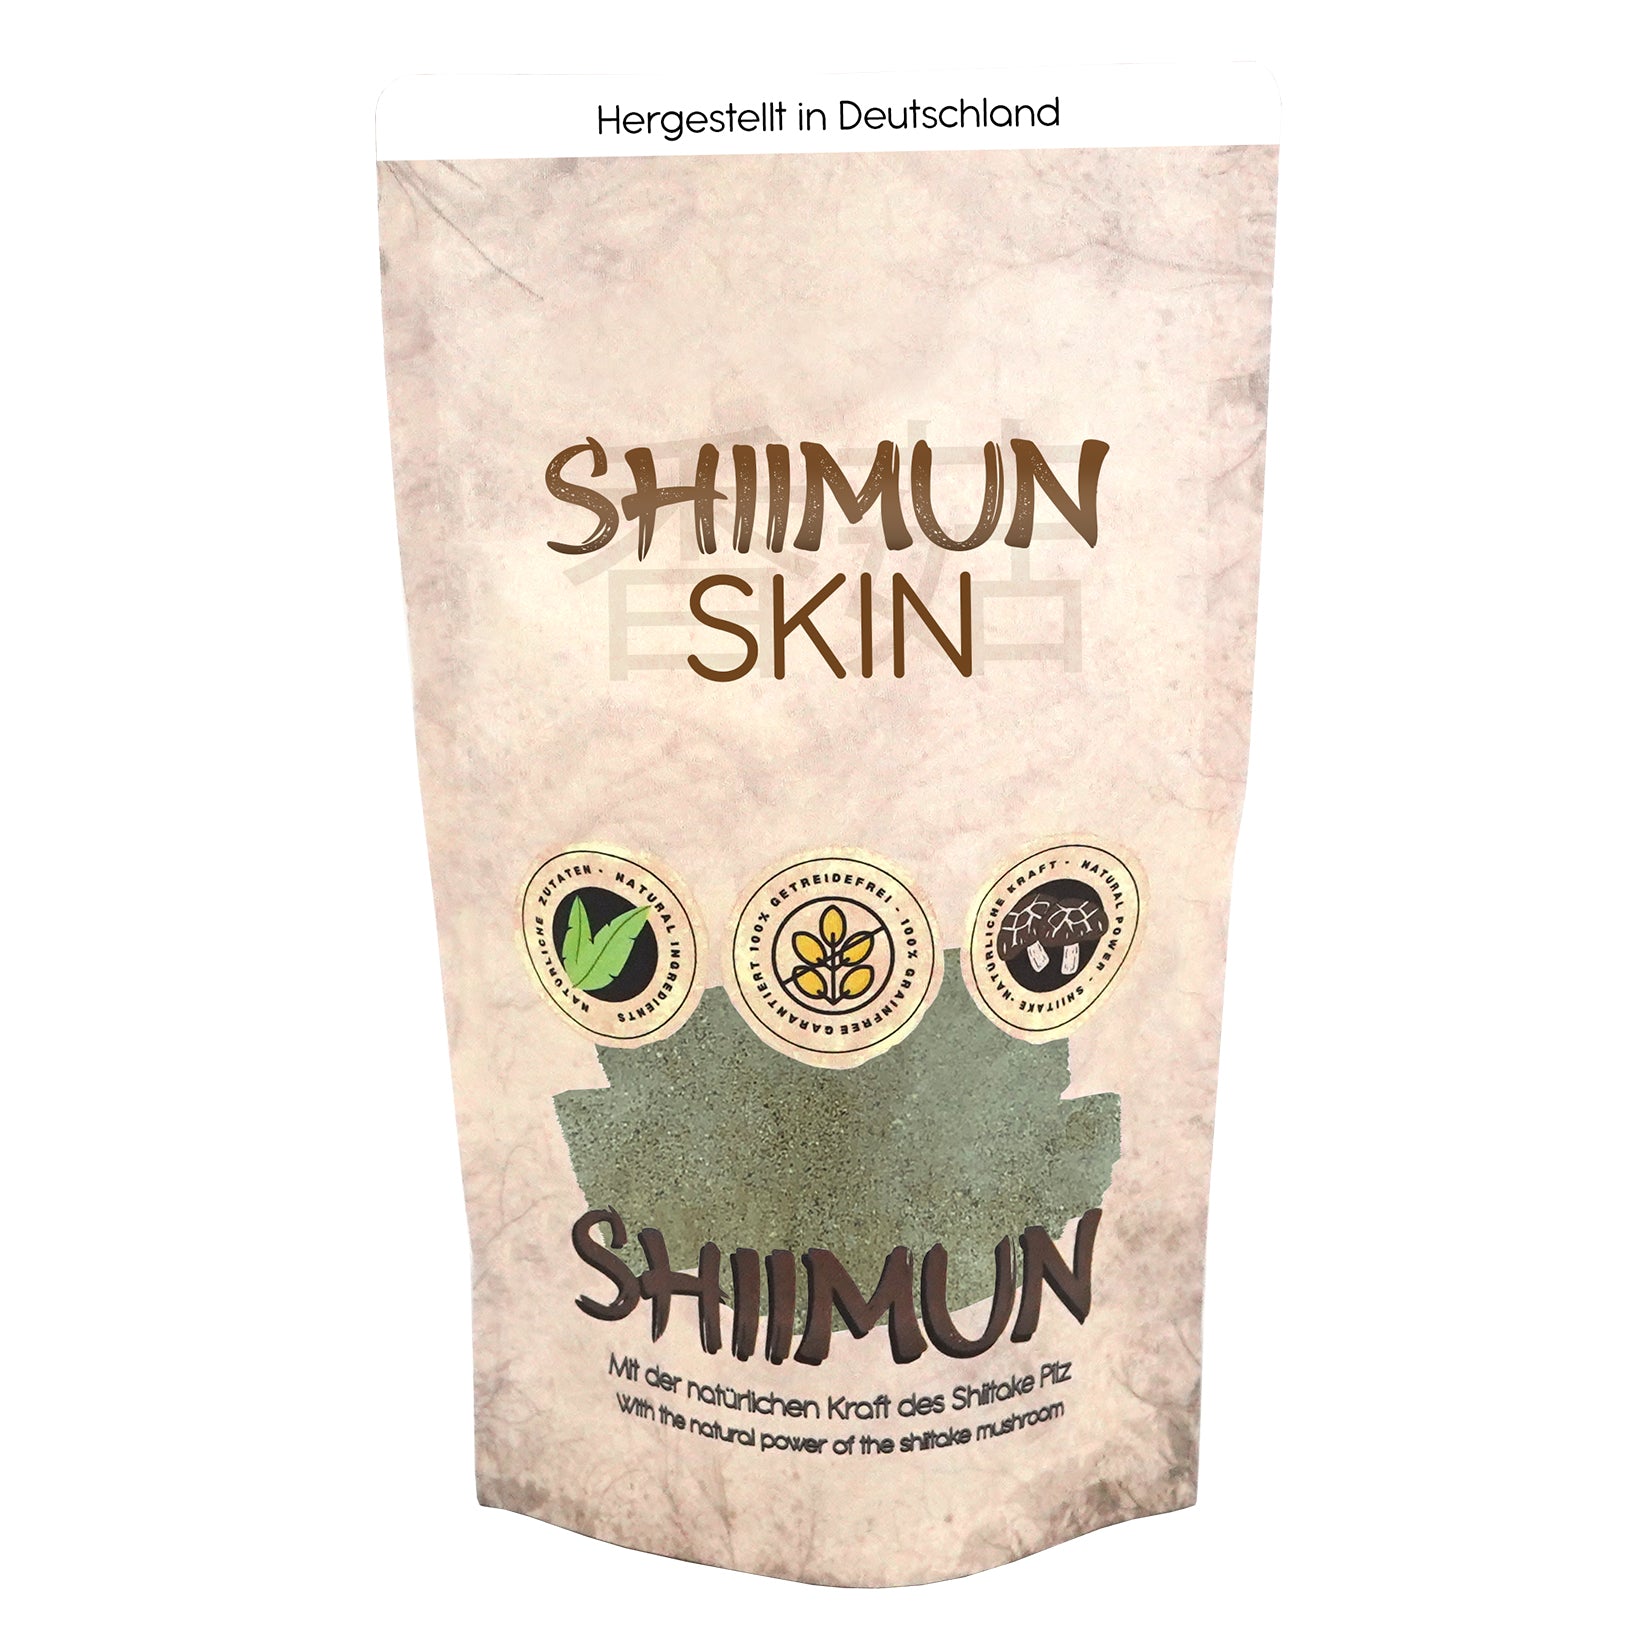 Shiimun Skin Pulver - 120g.